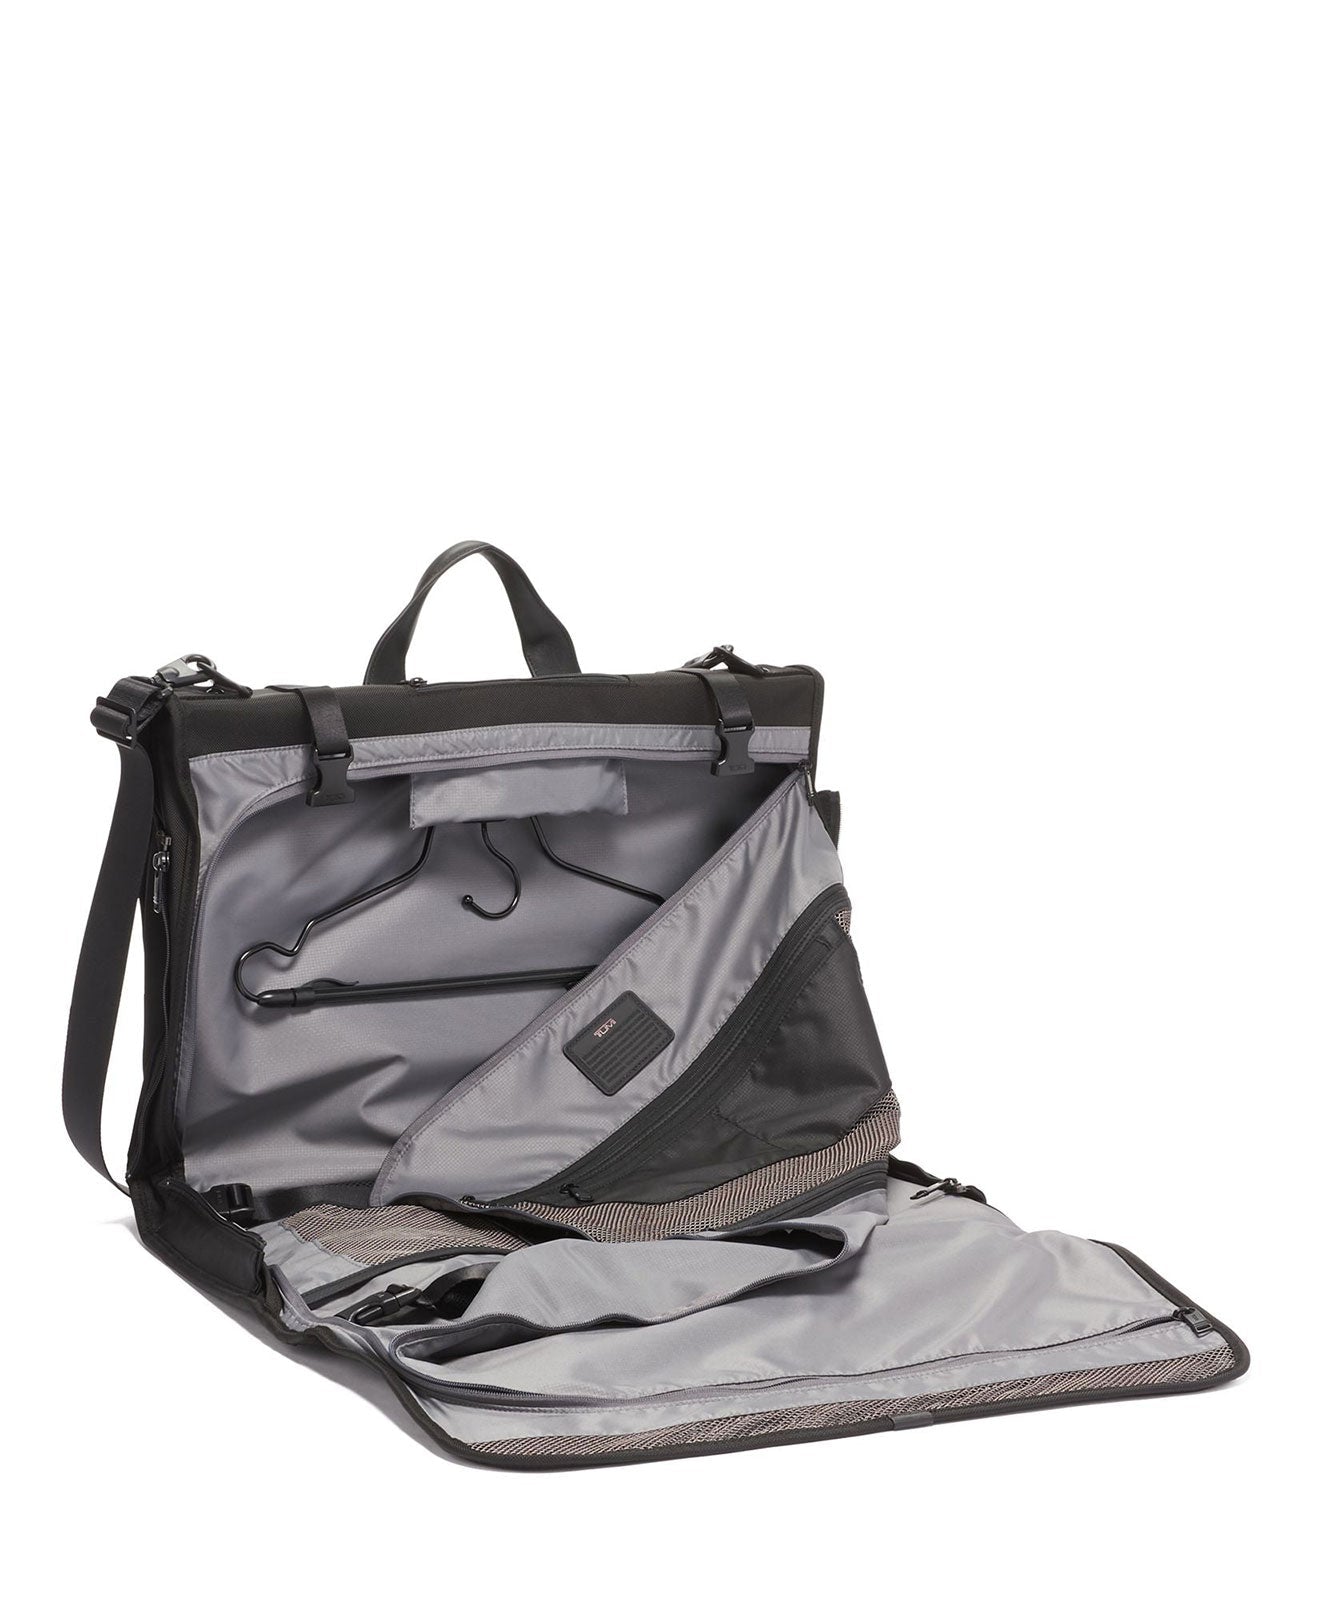 Tumi Garment Bag Tri-Fold Carry-On, Black